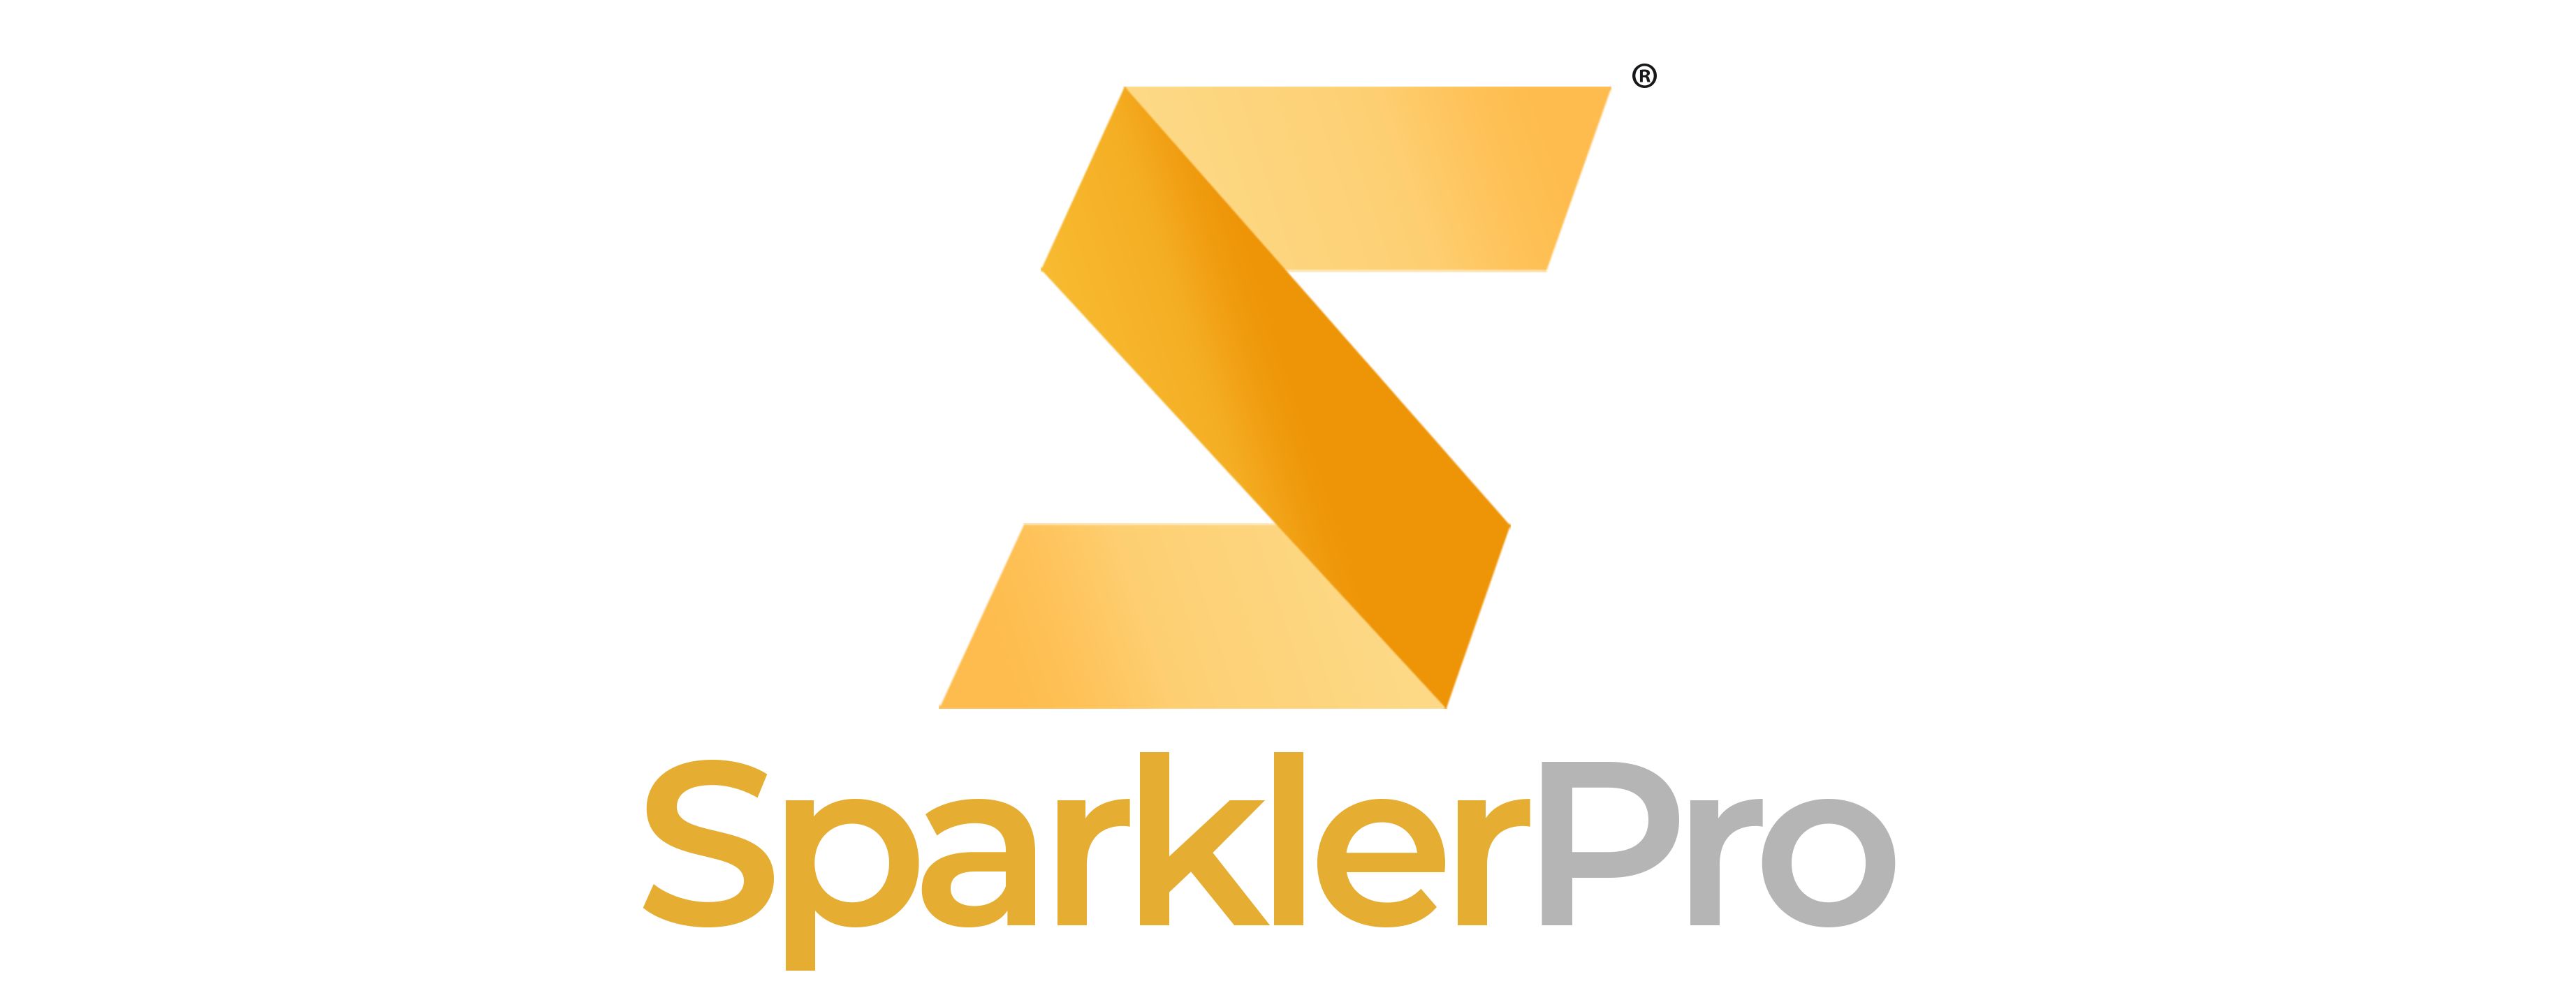 SparklerPro Logo